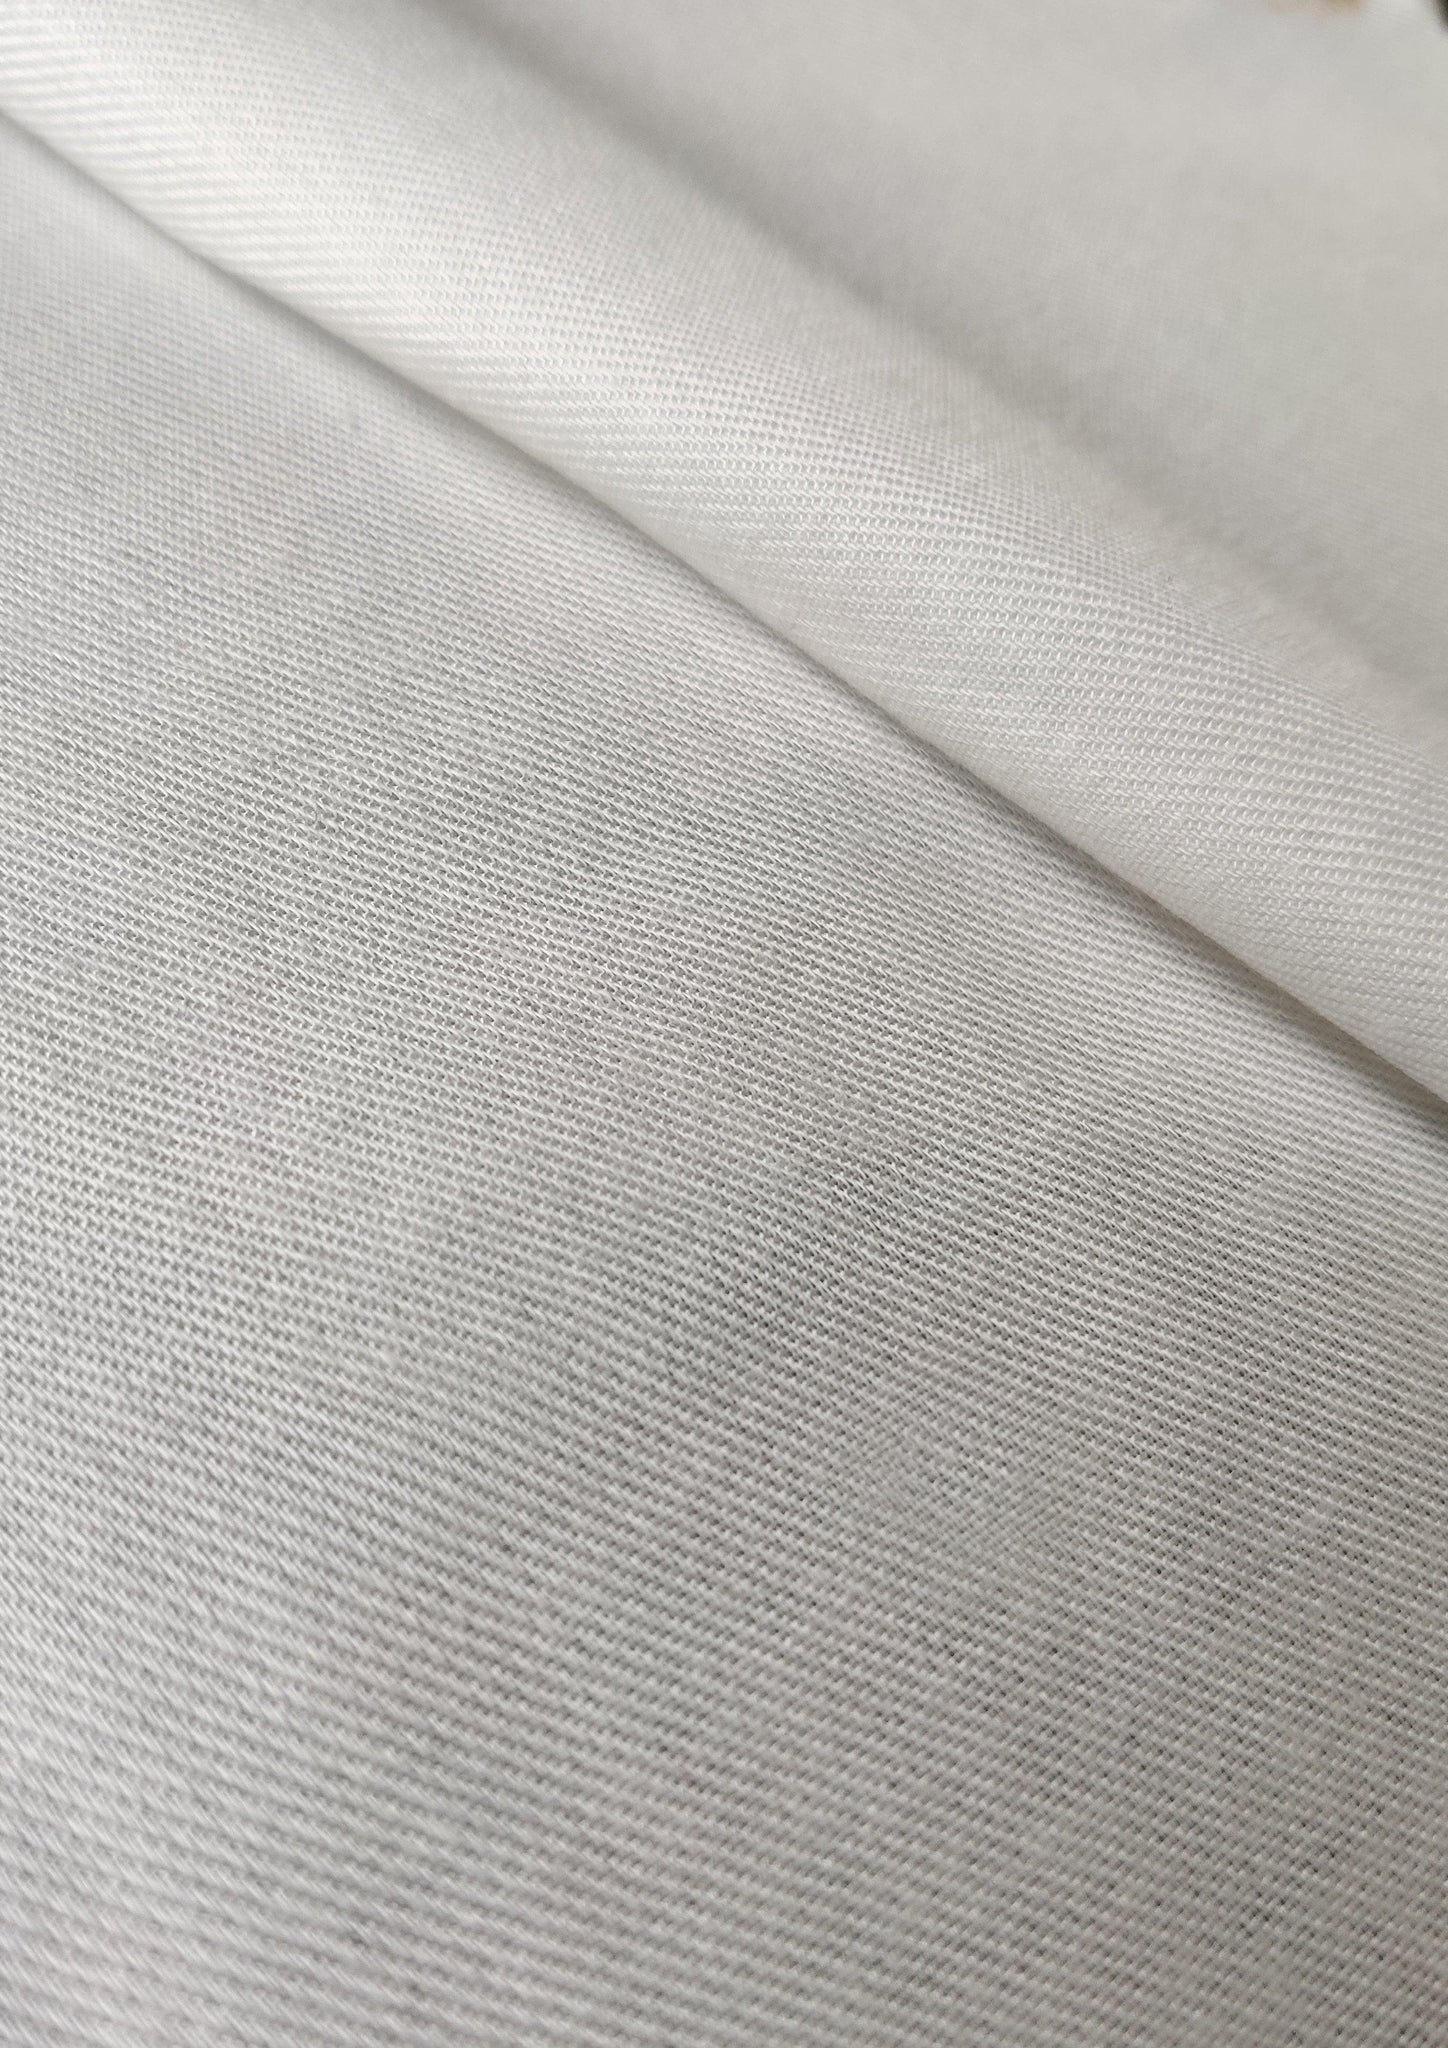 Hemp, Cotton, Viscose - Blended Woven Fabric - Hemp Republic